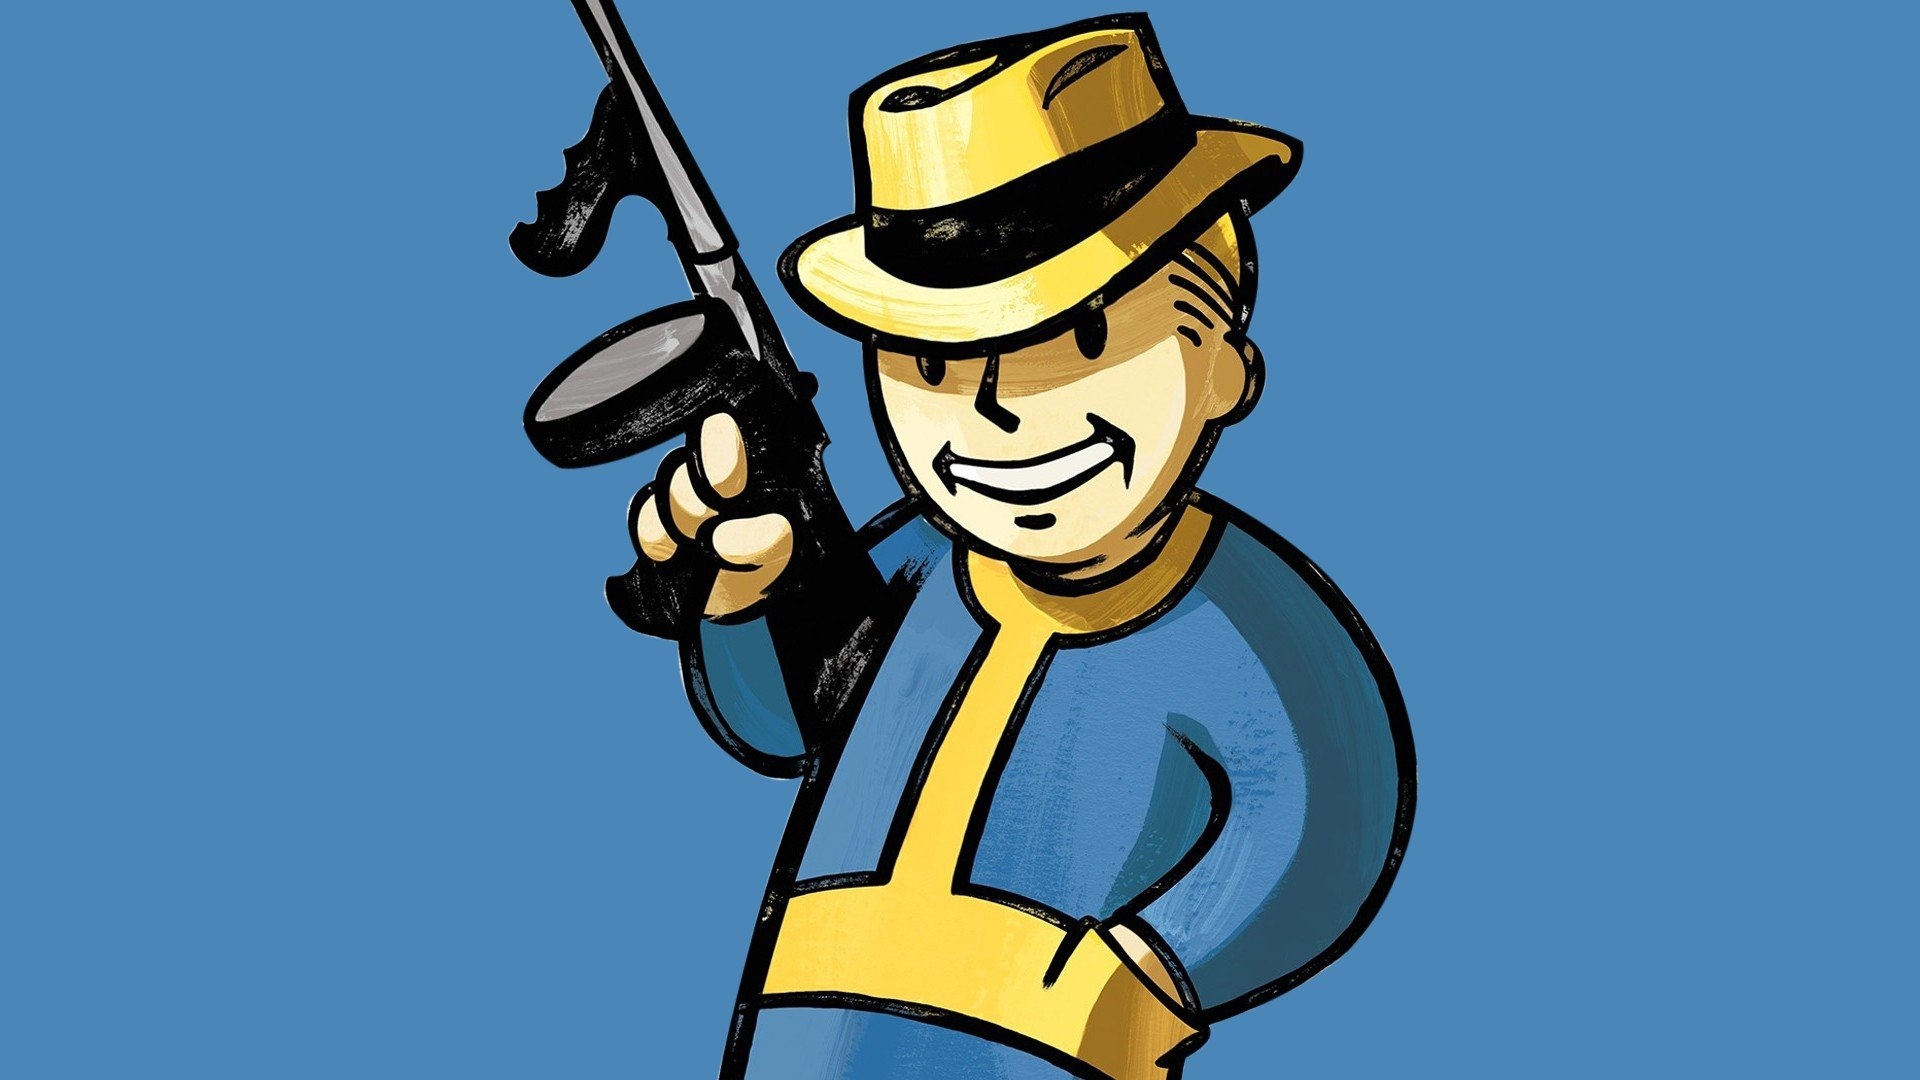 Bethesda games, Fallout Pip Boy, Role-playing wallpaper, PC gaming, 1920x1080 Full HD Desktop